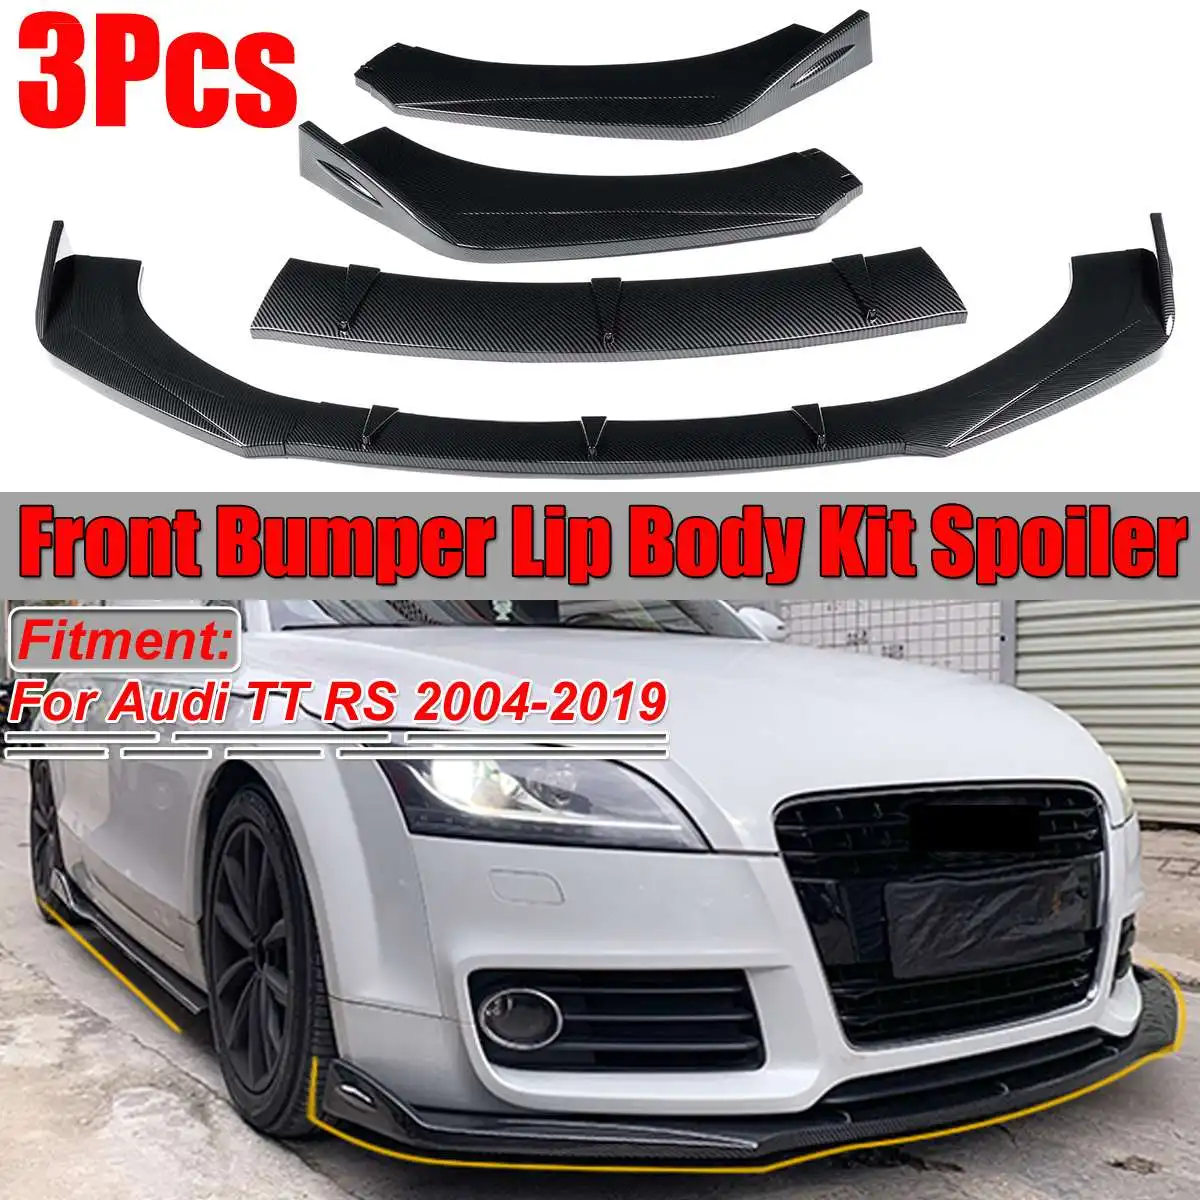 

Carbon Fiber Look/Gloss/Matte Black Car Front Bumper Splitter Lip Body Kit Spoiler Diffuser Protector For Audi TT RS 2004-2019